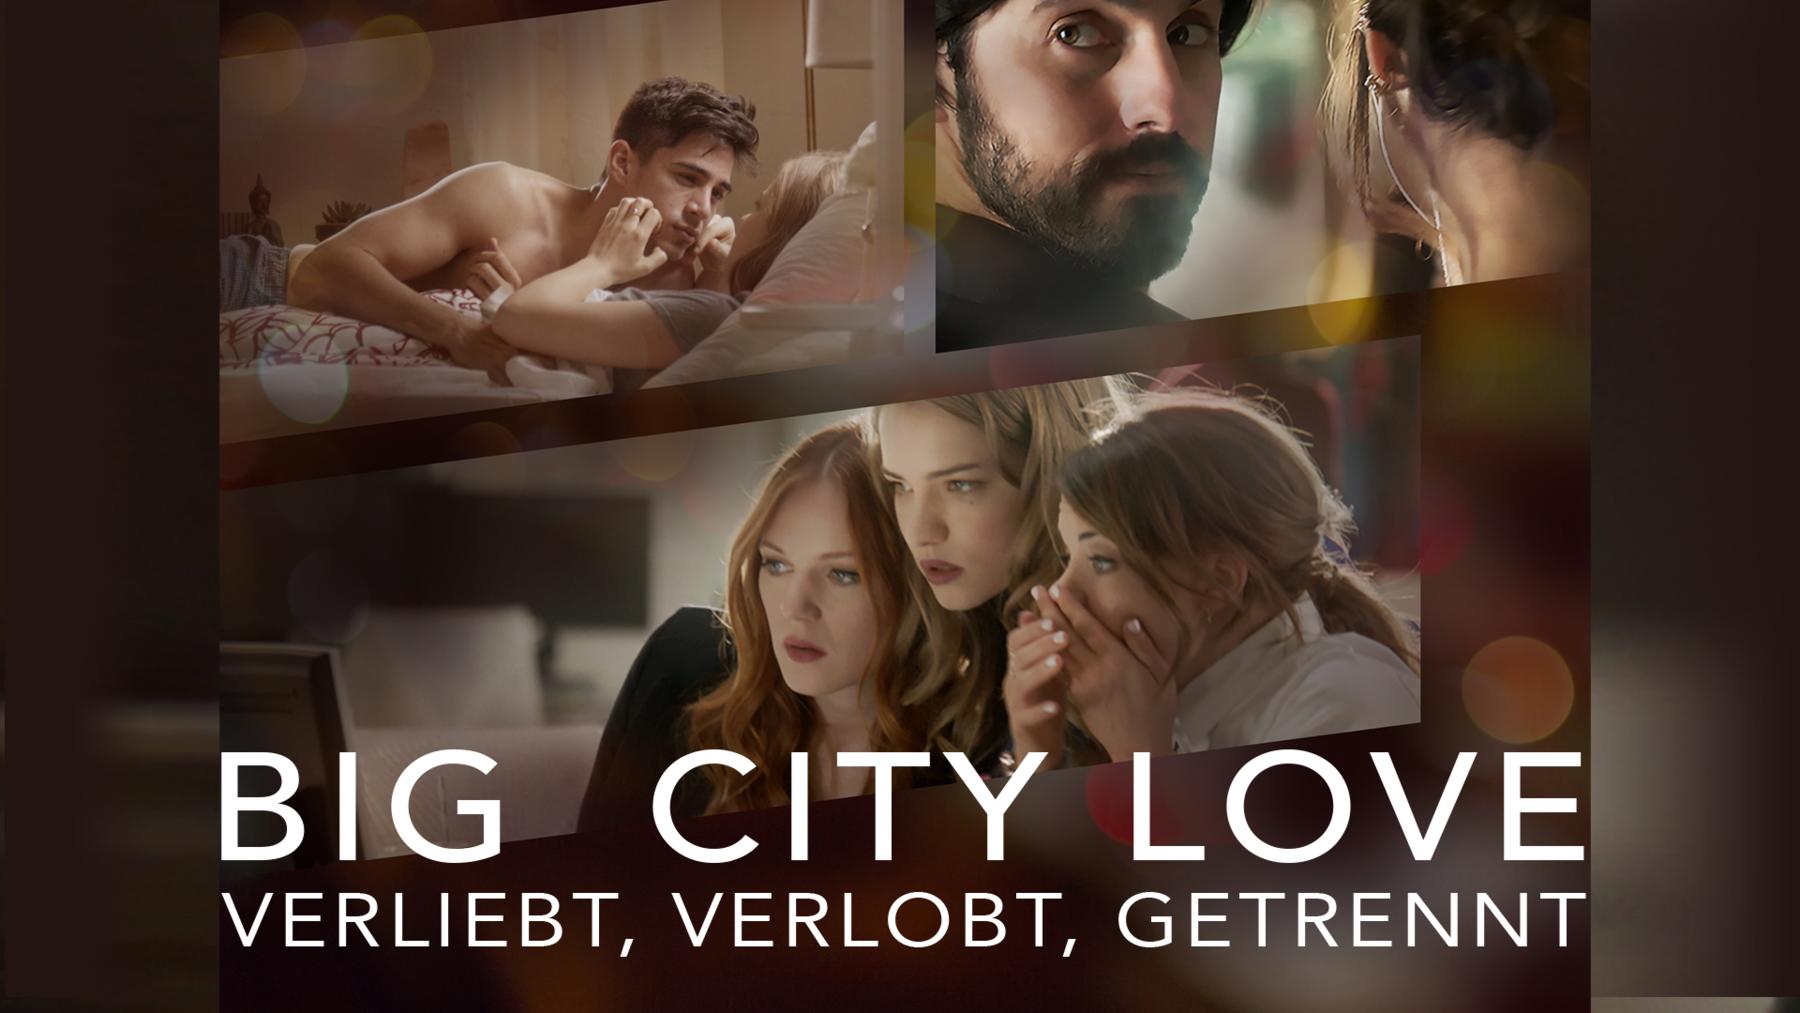 Big City Love - Verliebt, verlobt, getrennt